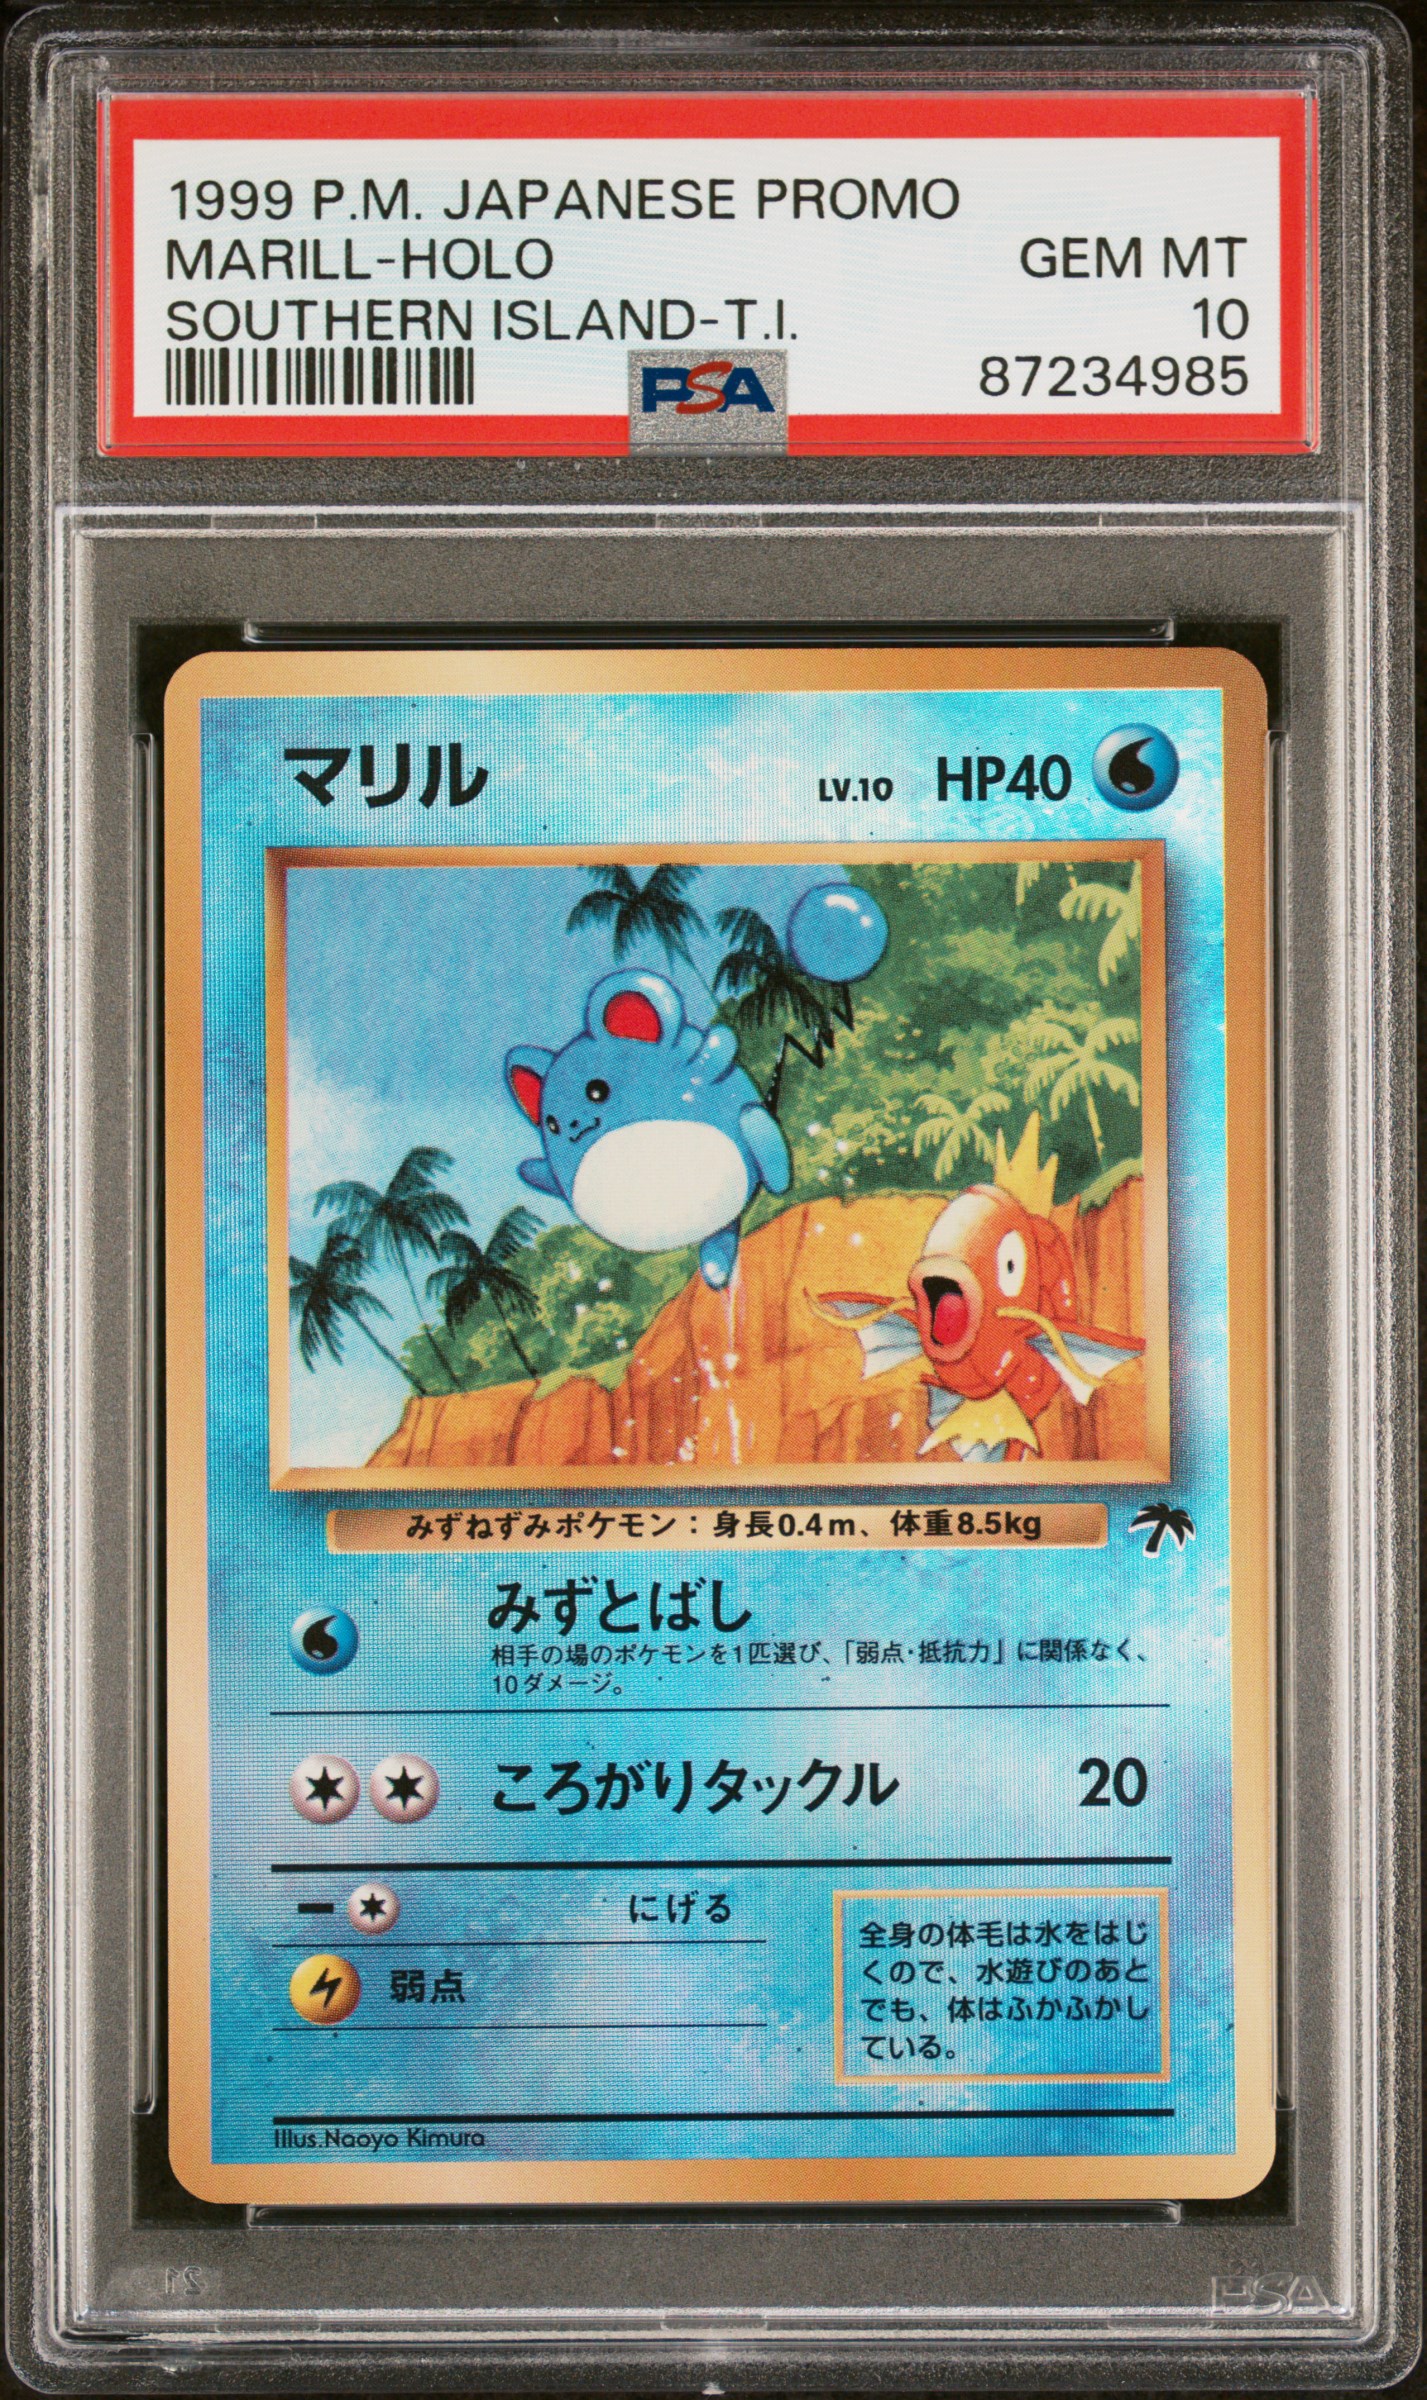 1999 Pokemon Japanese Promo Southern Islands Southern Island-T.I. Marill-Holo – PSA GEM MT 10